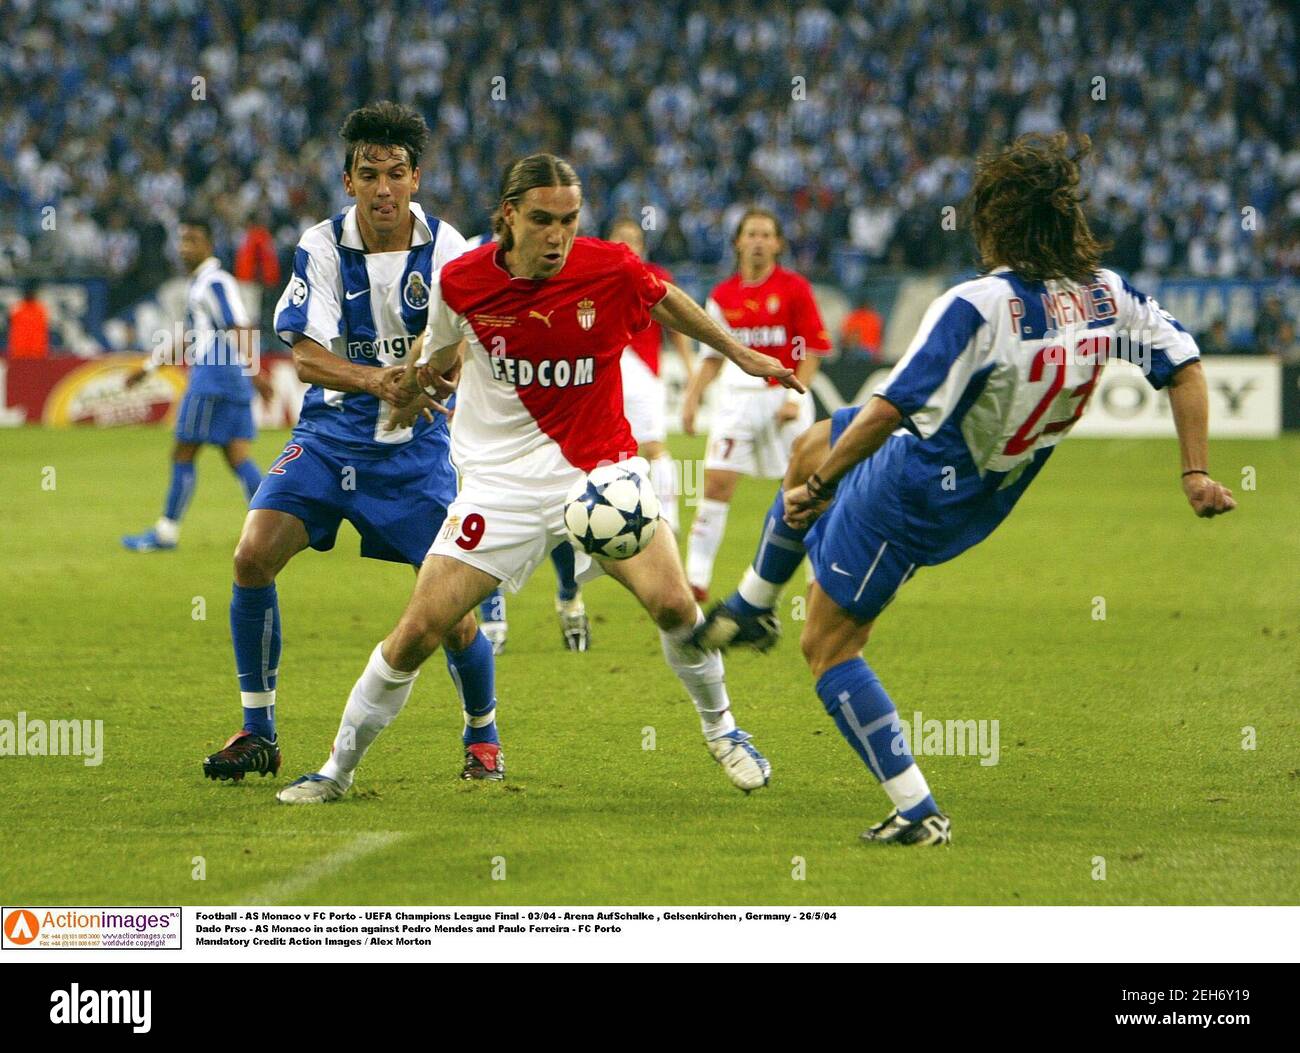 Football - AS Monaco v FC Porto - UEFA Champions League Final - 03/04 -  Arena AufSchalke , Gelsenkirchen , Germany - 26/5/04 Dado Prso - AS Monaco  in action against Pedro